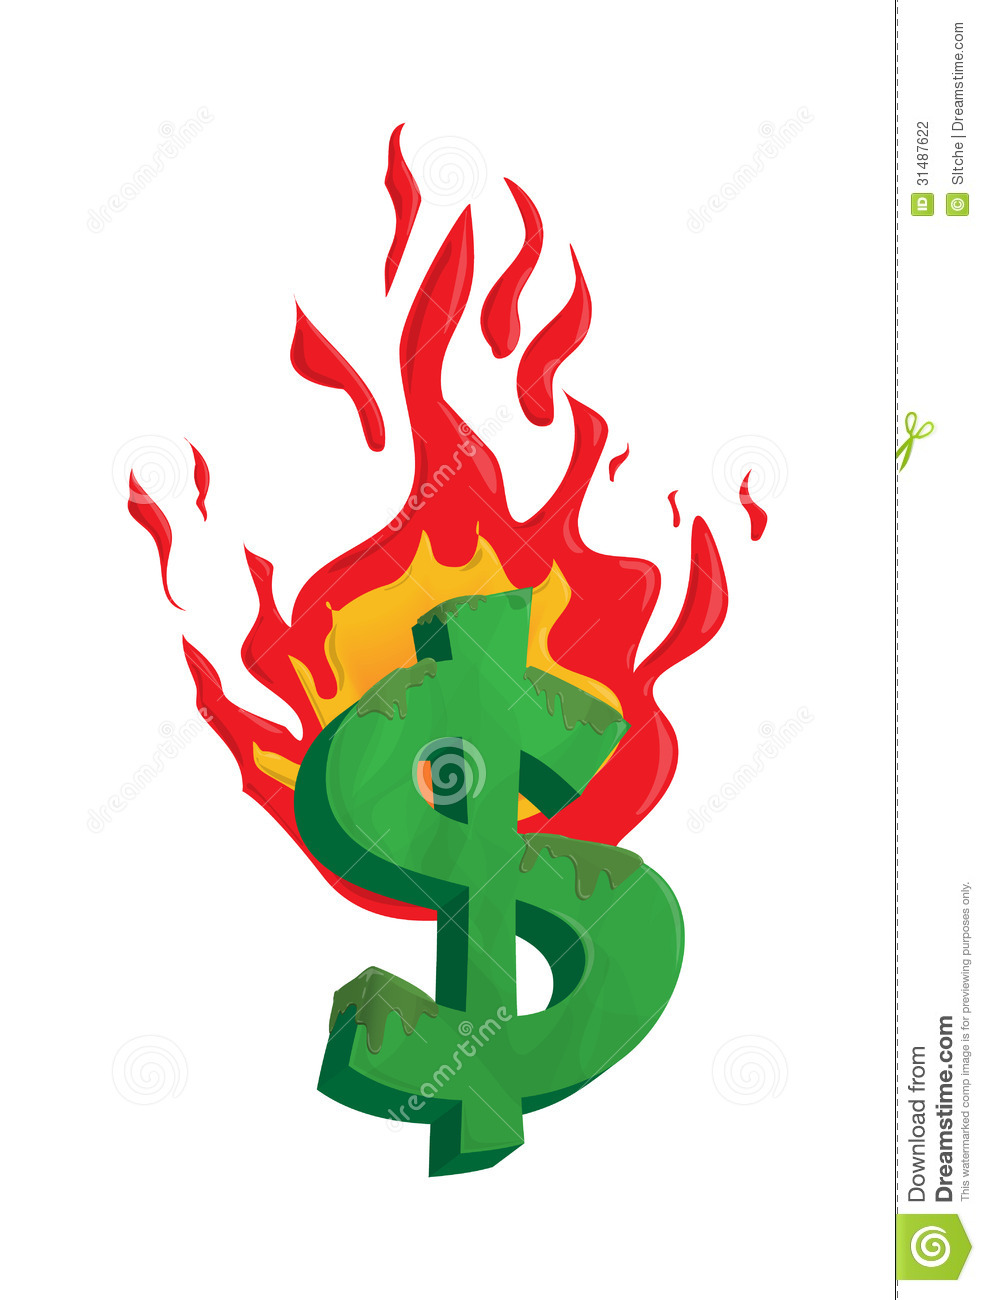 Burning Joint Clipart Burning Dollar Money Illustration Burnt Fire